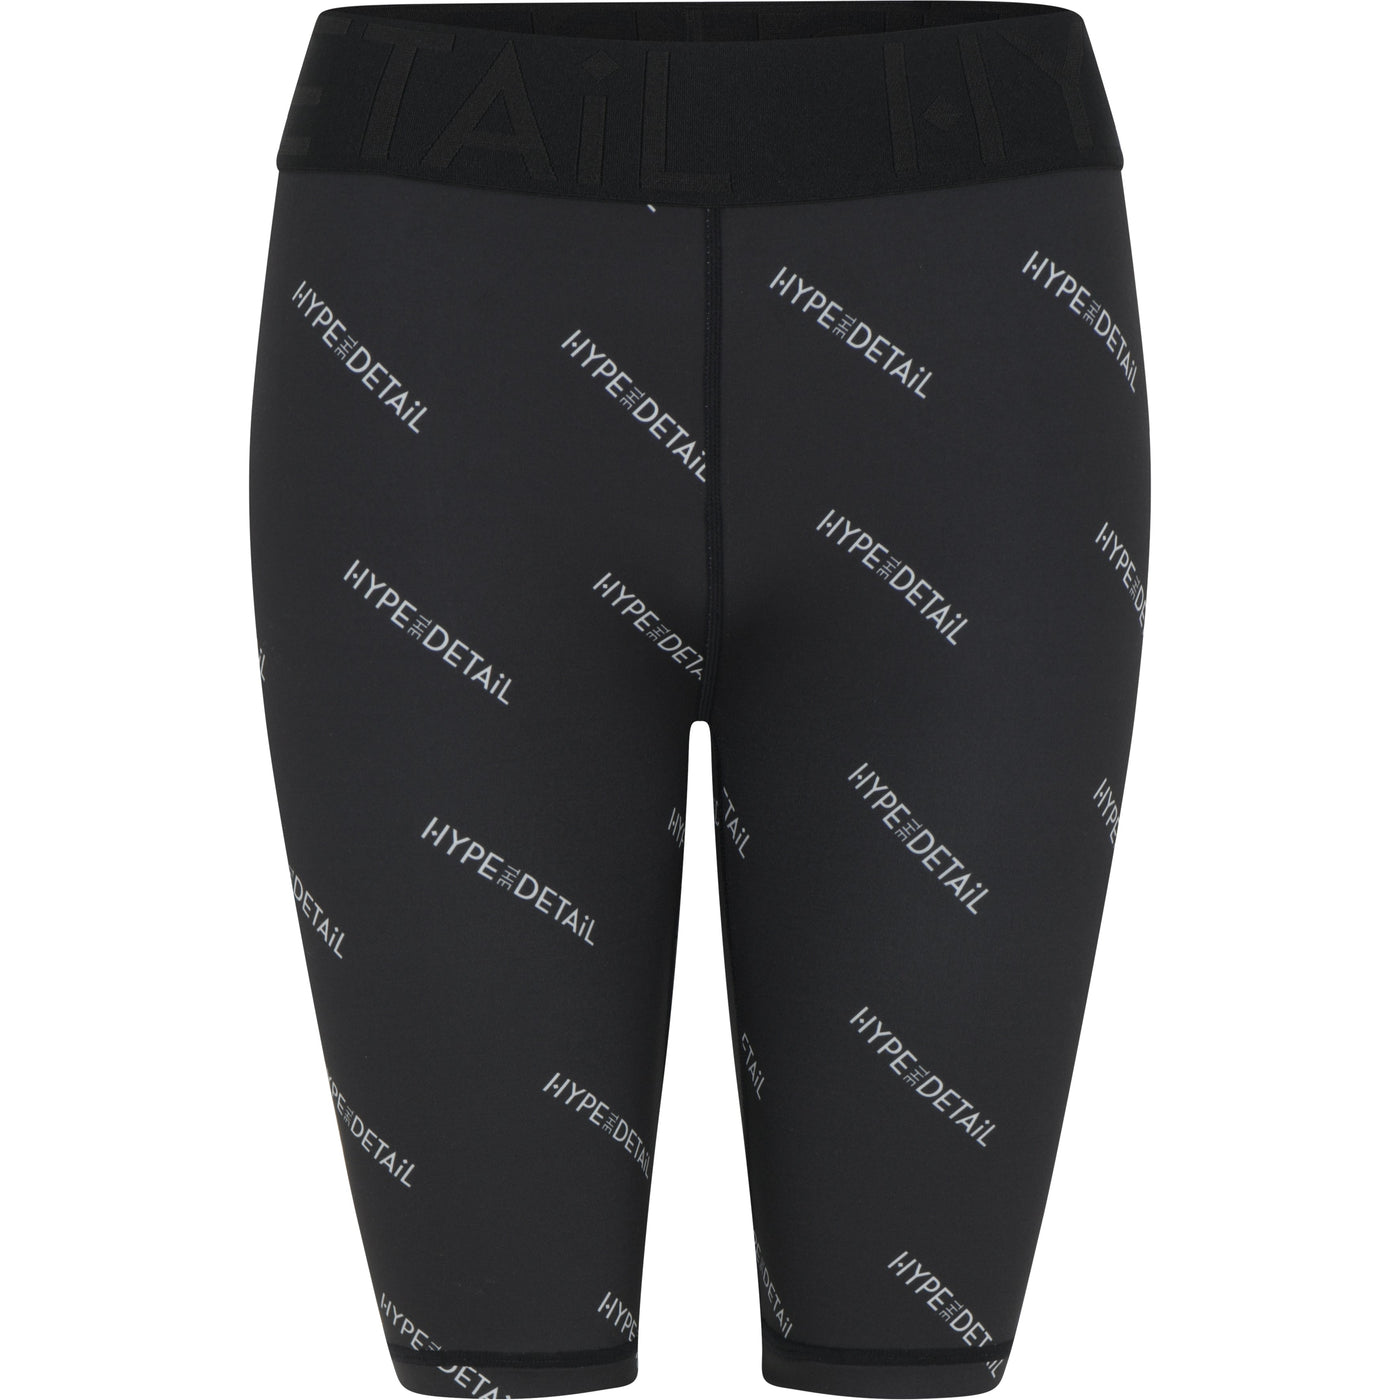 Hype the Detail Printed shorts, Black-Noisy Item